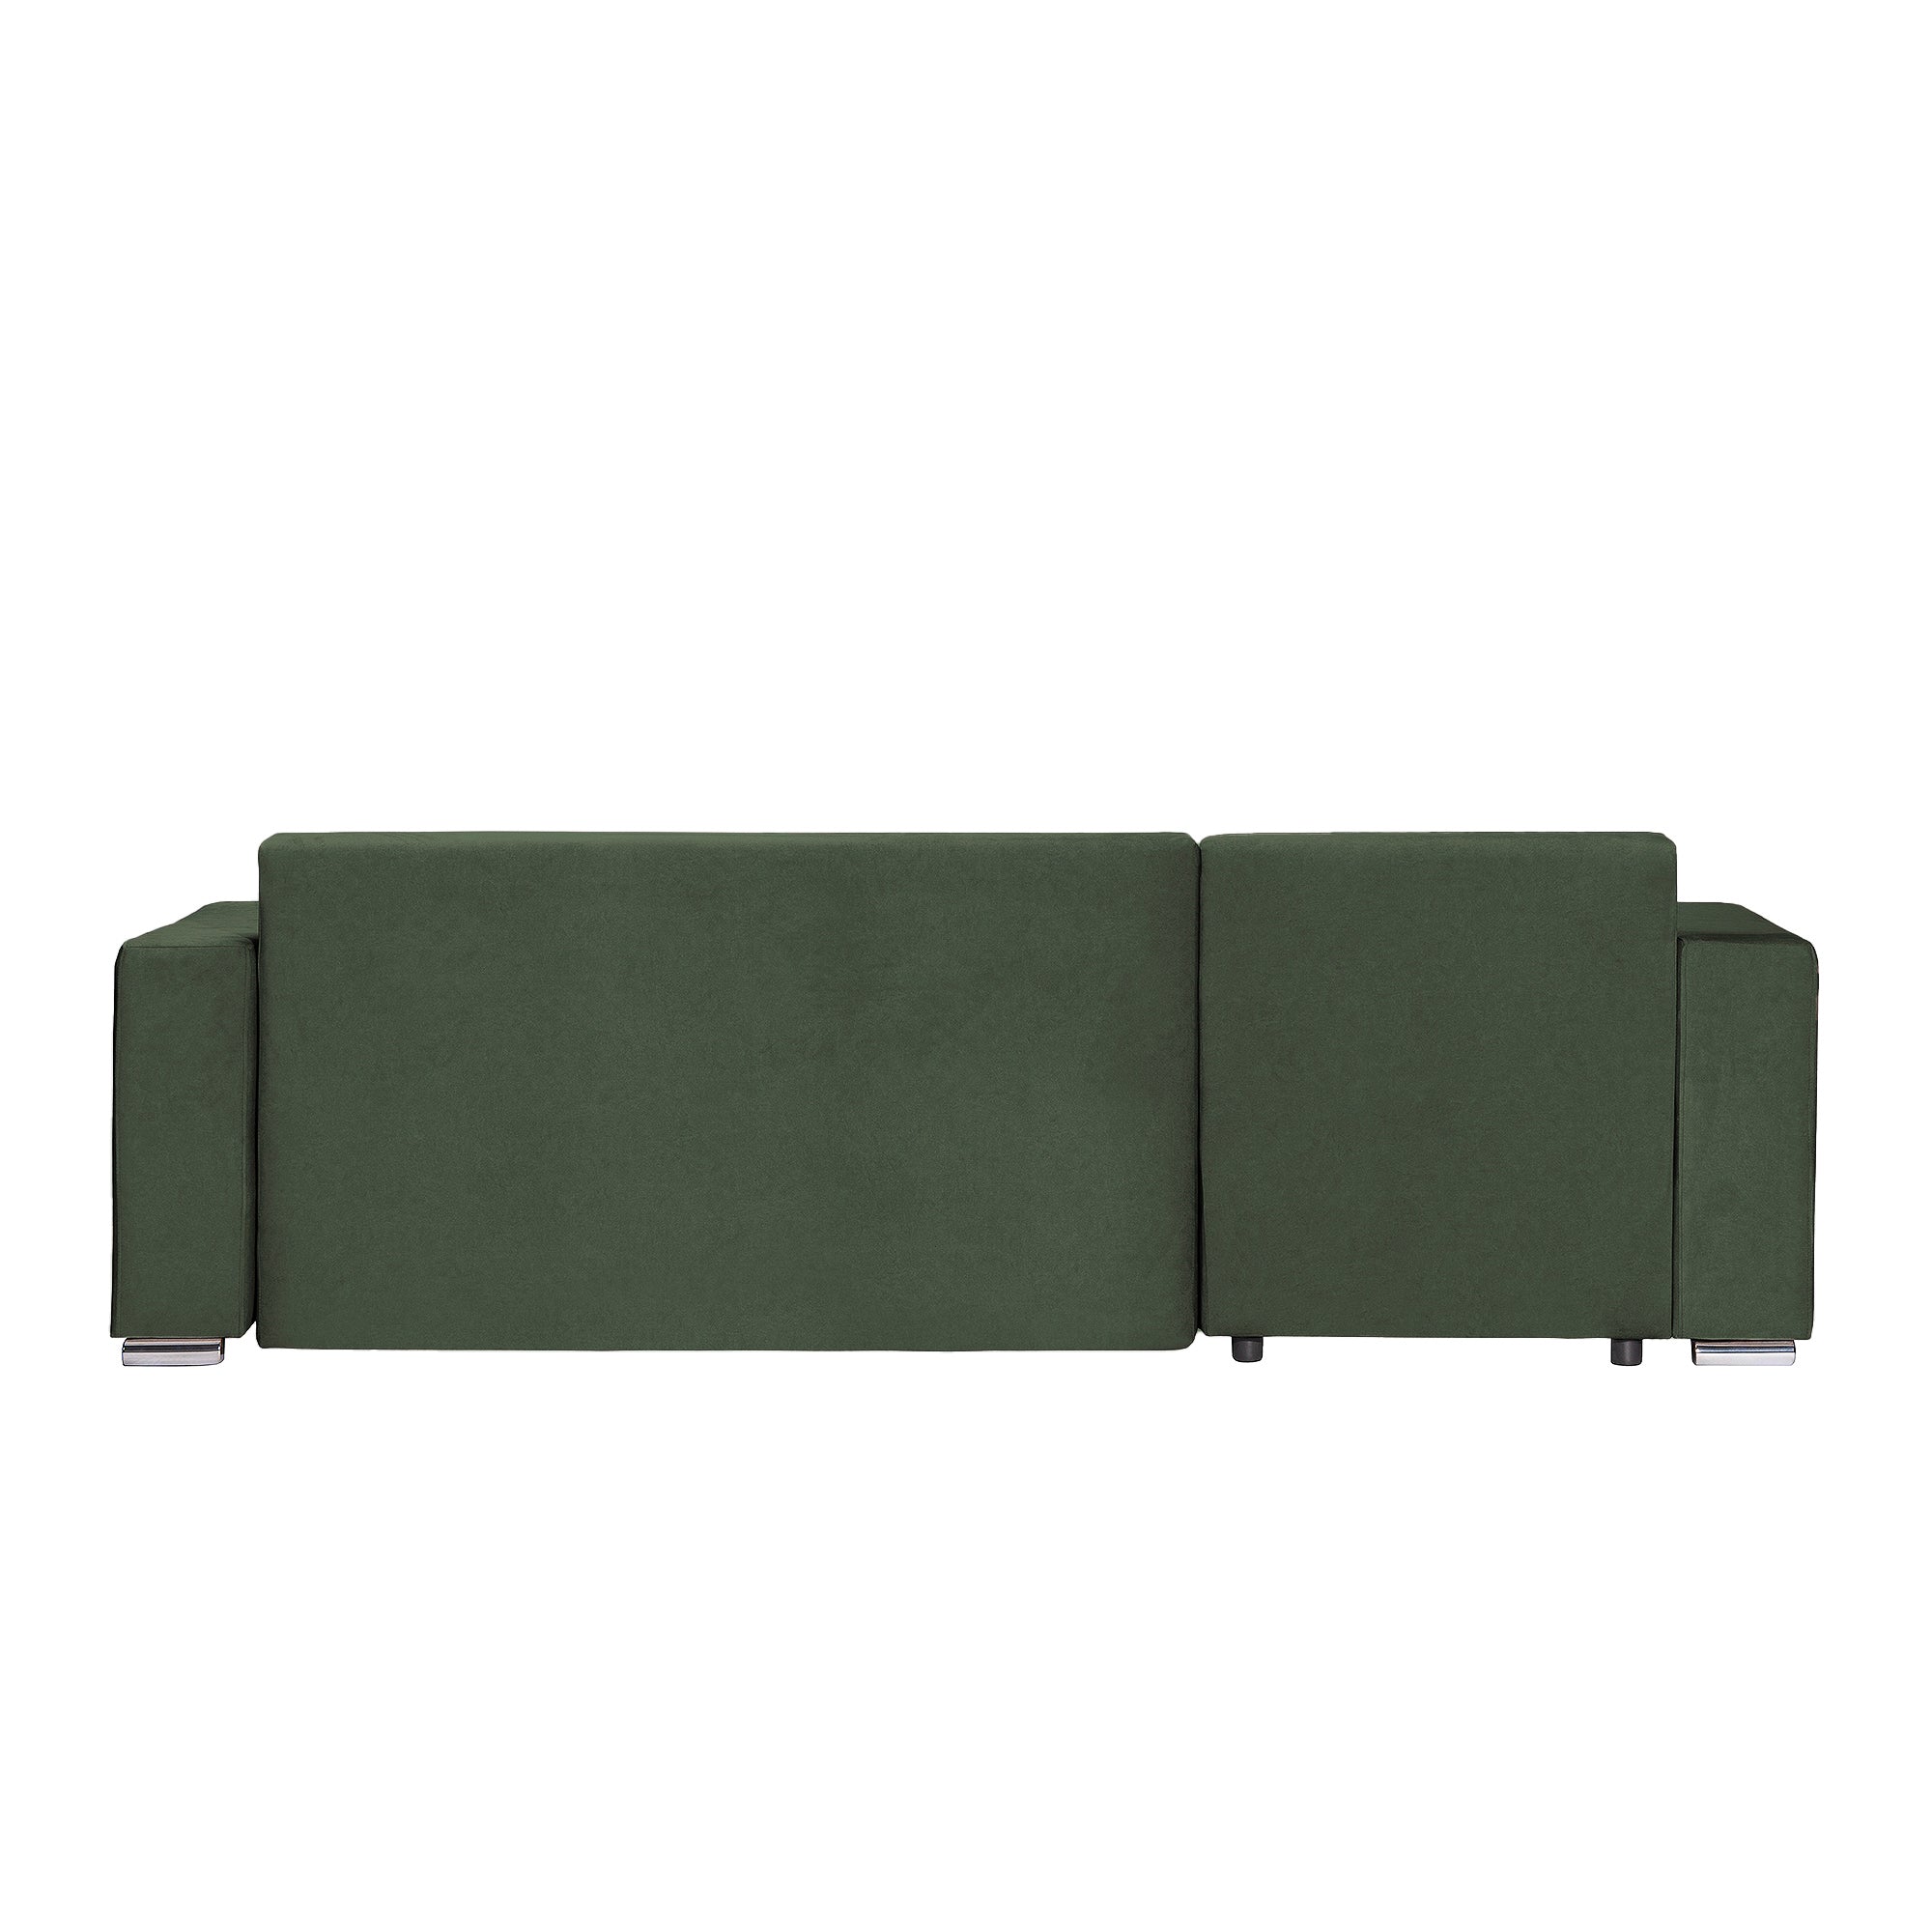 Colțar Extensibil DIEGO, cu lada depozitare, sezlong interschimbabil, 230x190x93cm, Prestigehome.ro, #color_Verde-Whisper